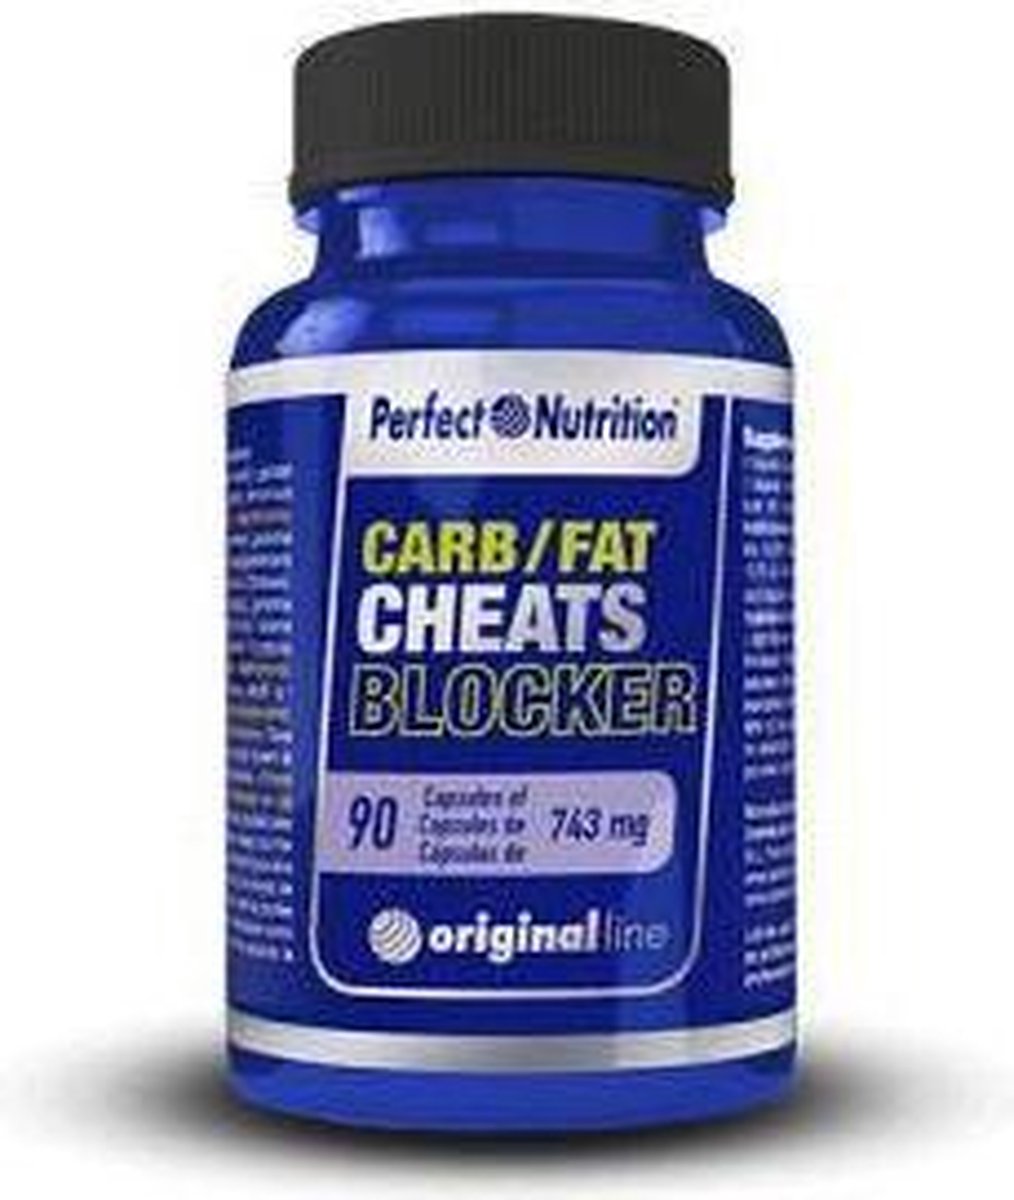 Perfect Nutrition Cheats Blocker Carb & Fat 90 Capsules 743 Mg